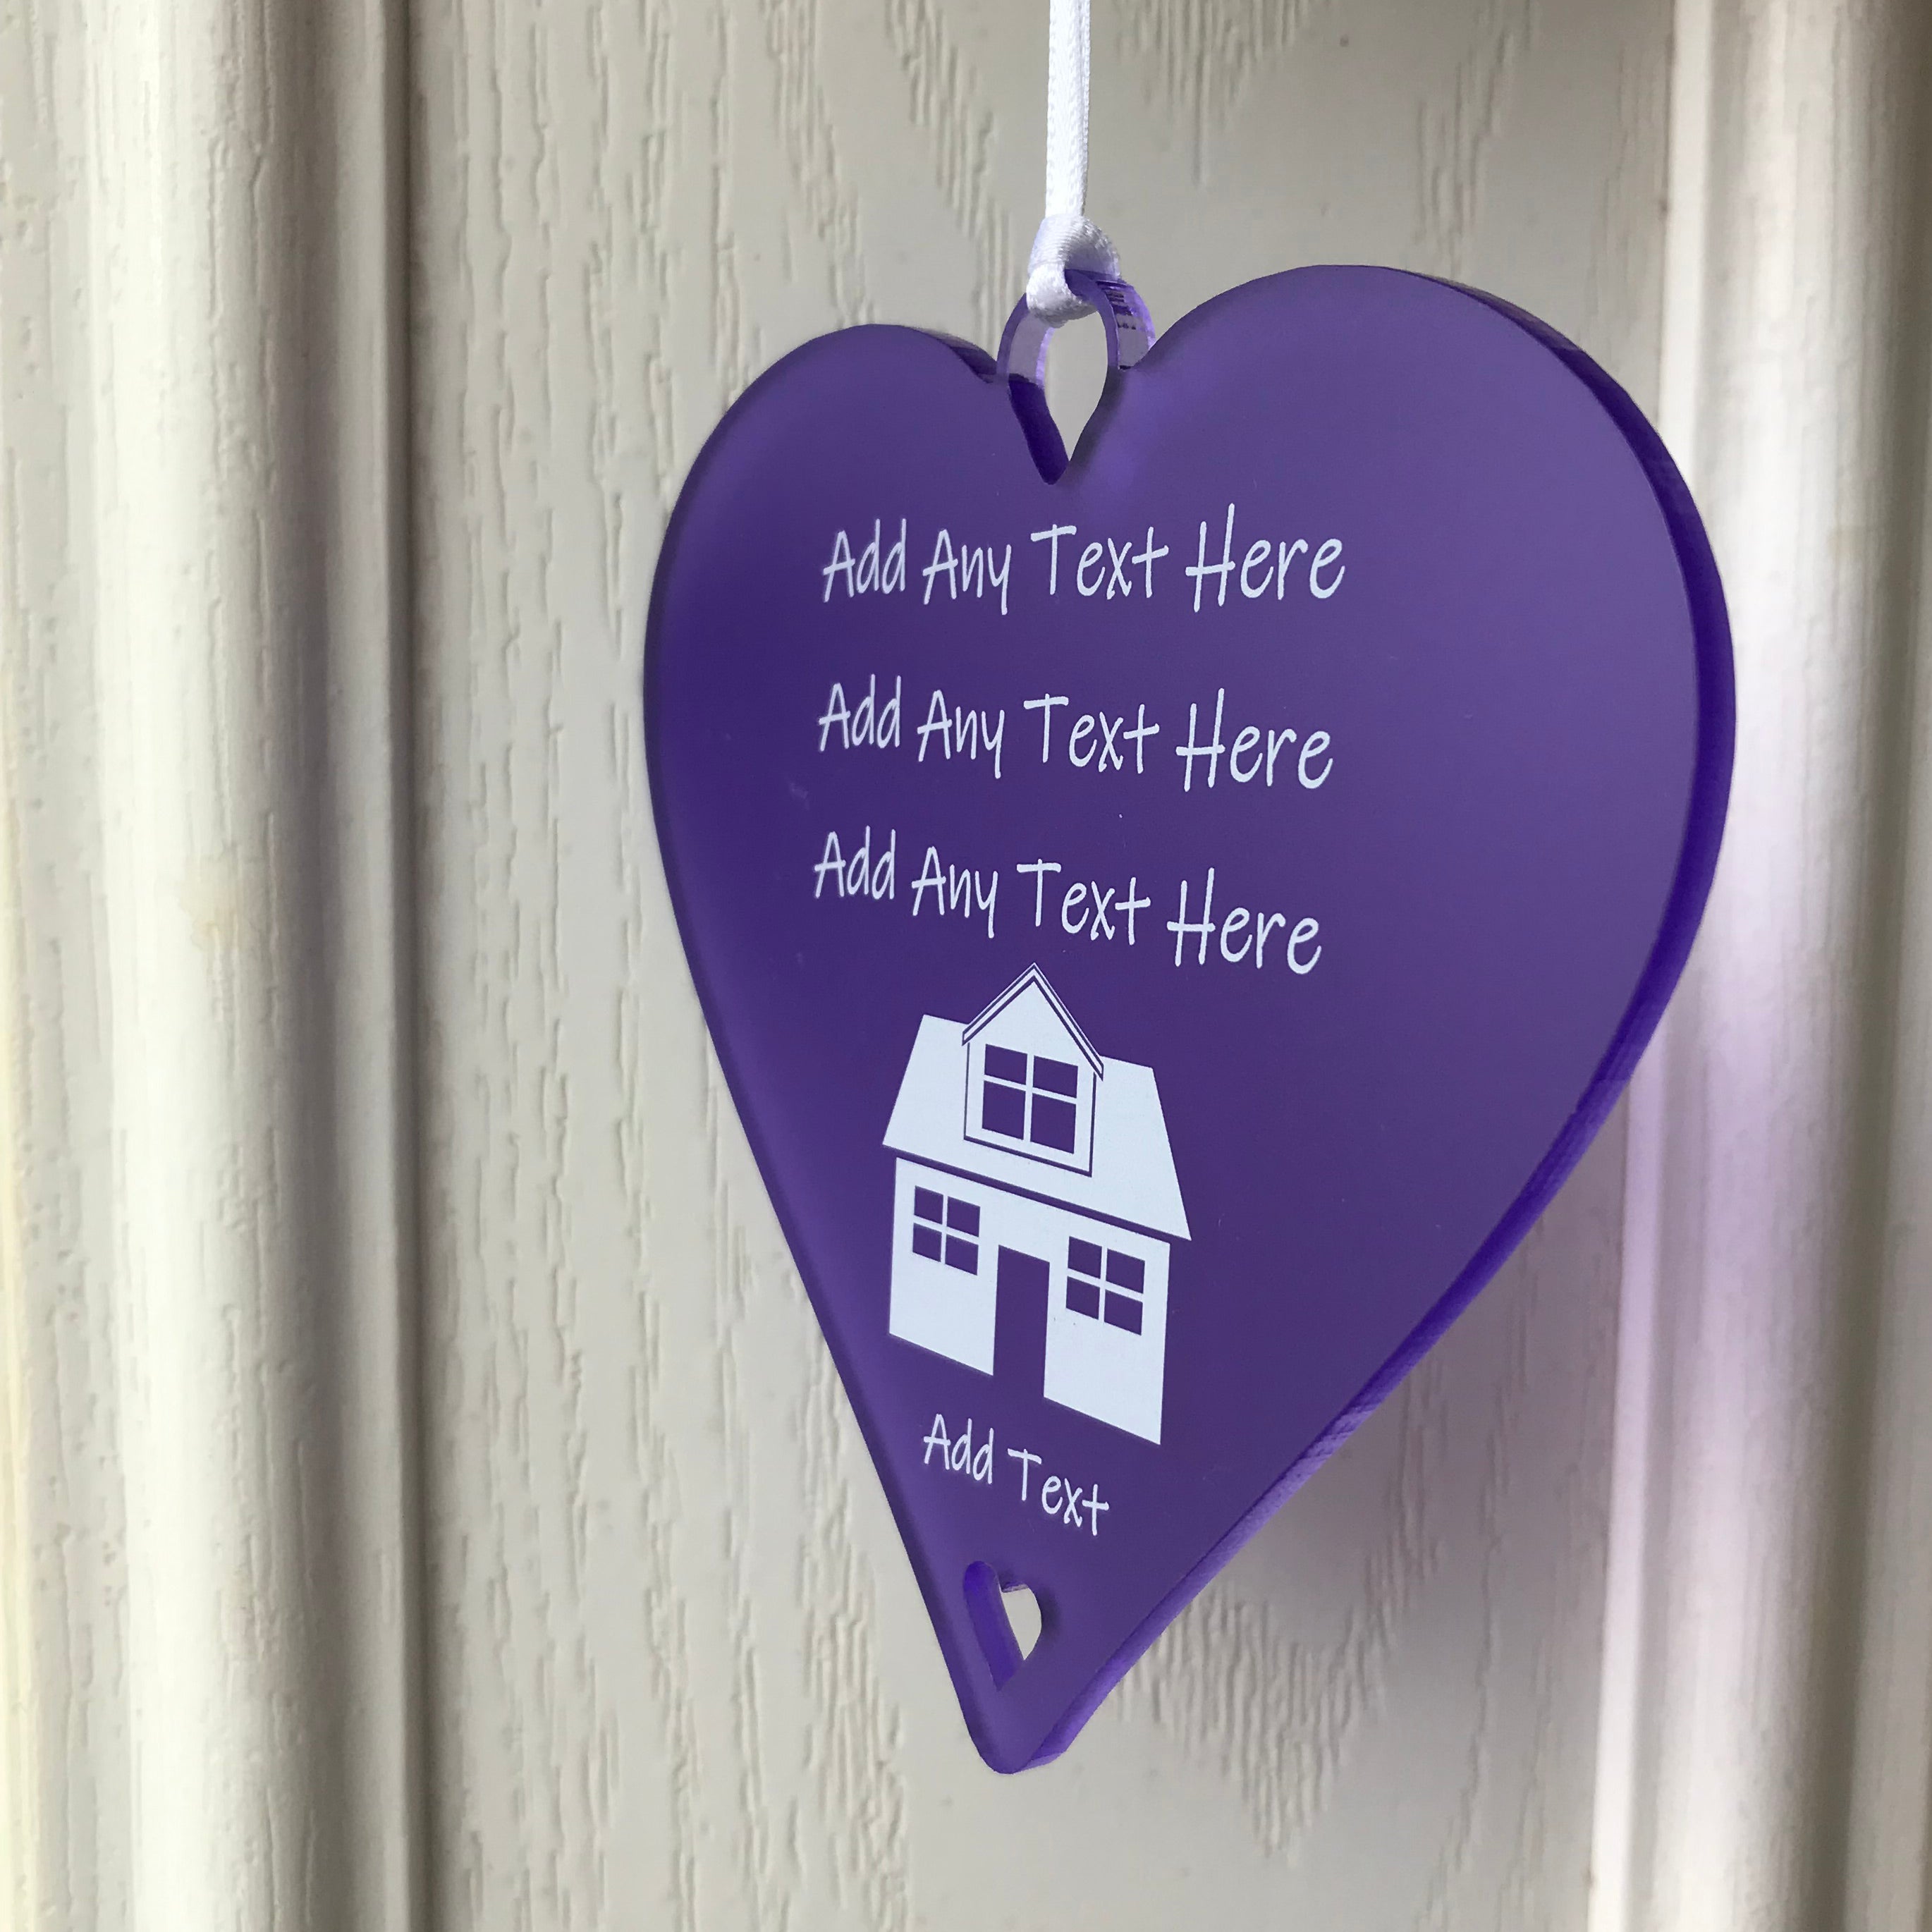 New Home Housewarming Gift Personalised Hanging Keepsake - 10cm Heart